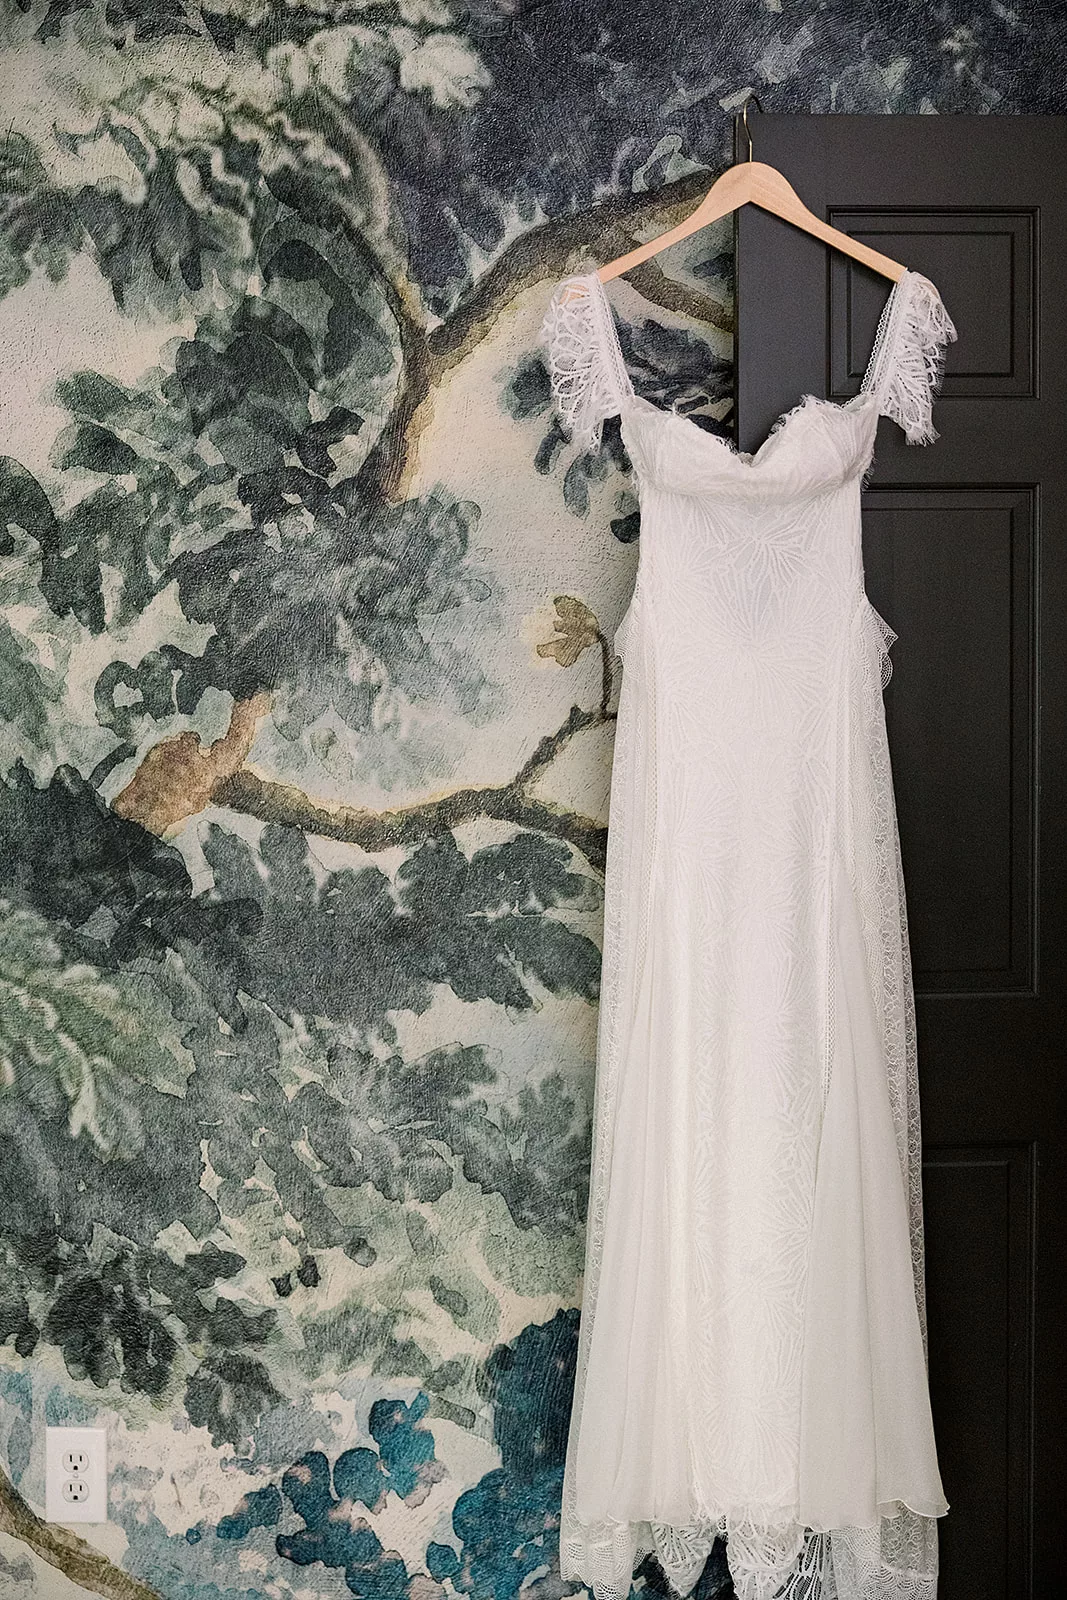 A wedding dress hangs from a door against a forest mural